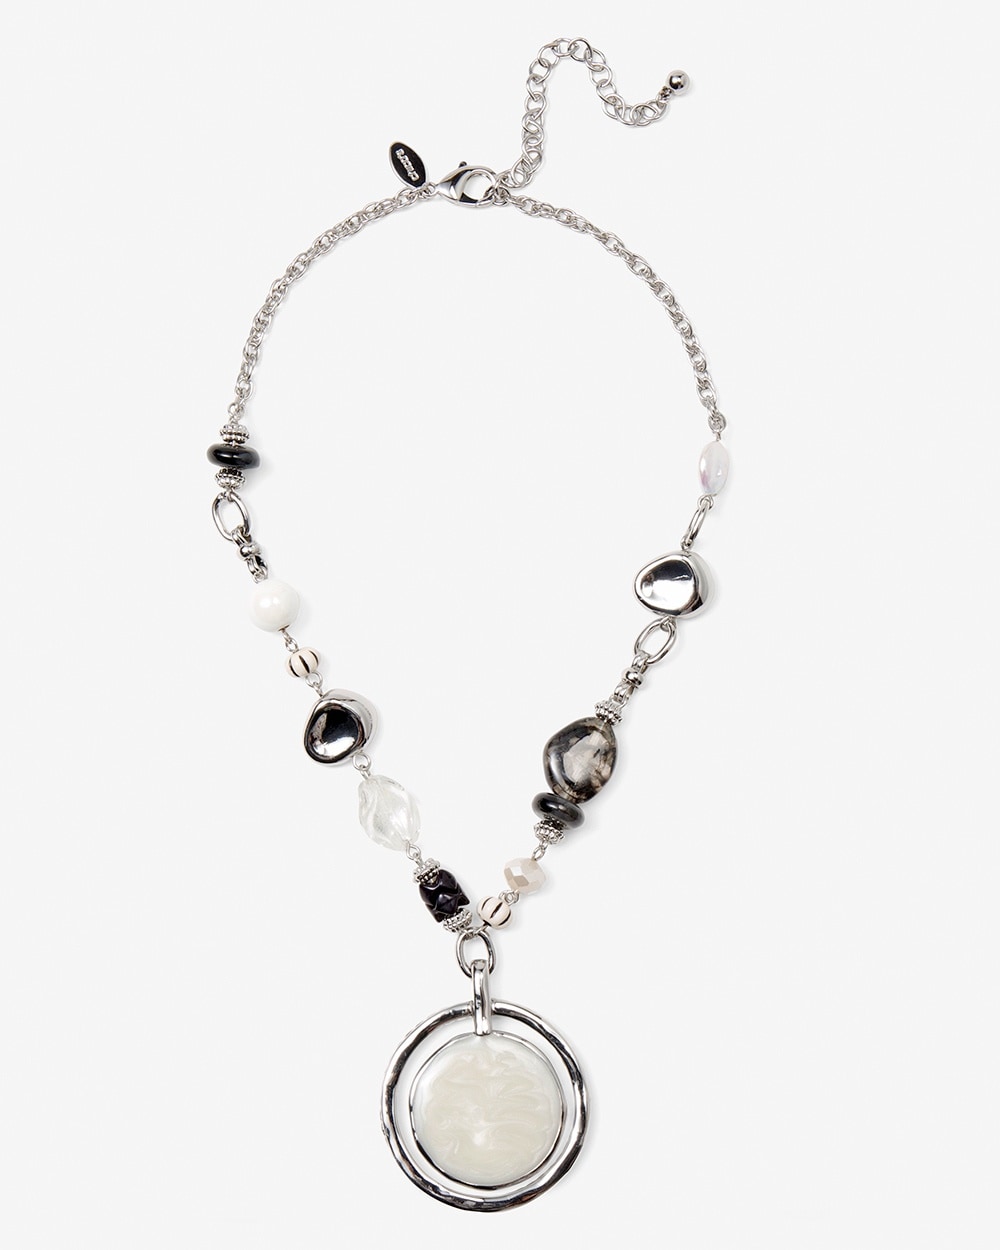 Reversible Black & White Pendant Necklace